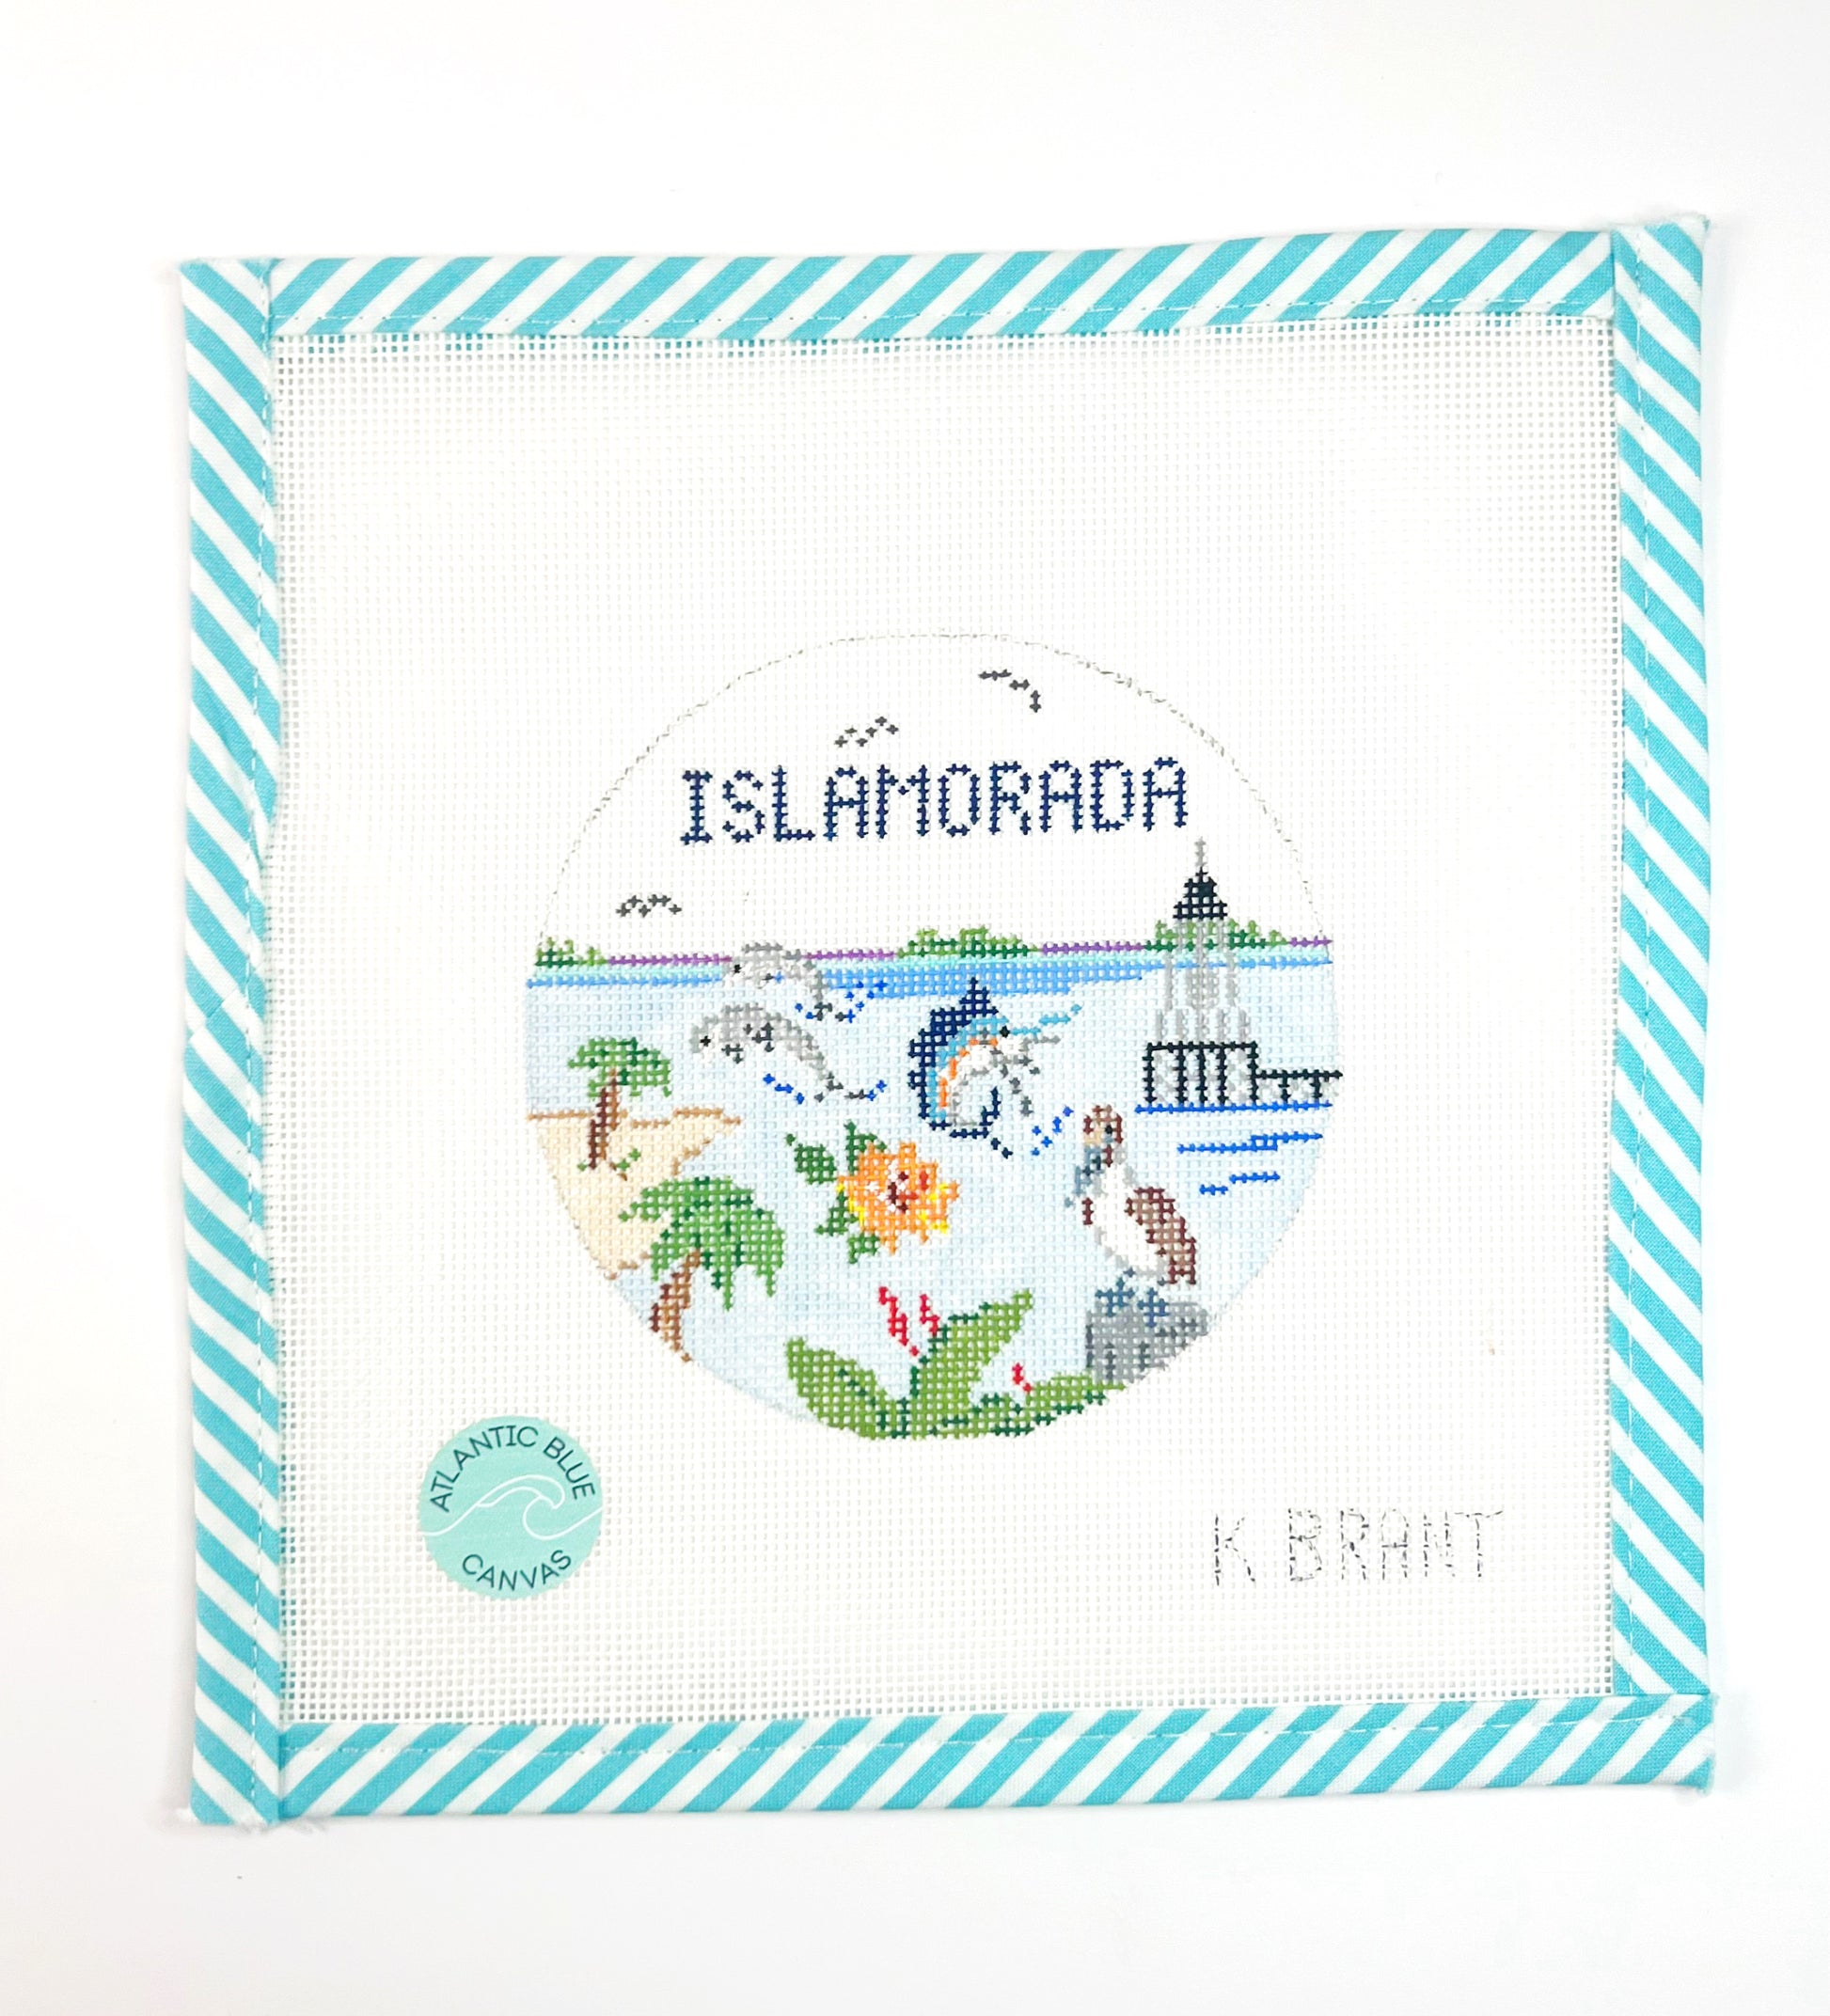 Islamorada Travel Round - Florida Keys - Atlantic Blue Canvas